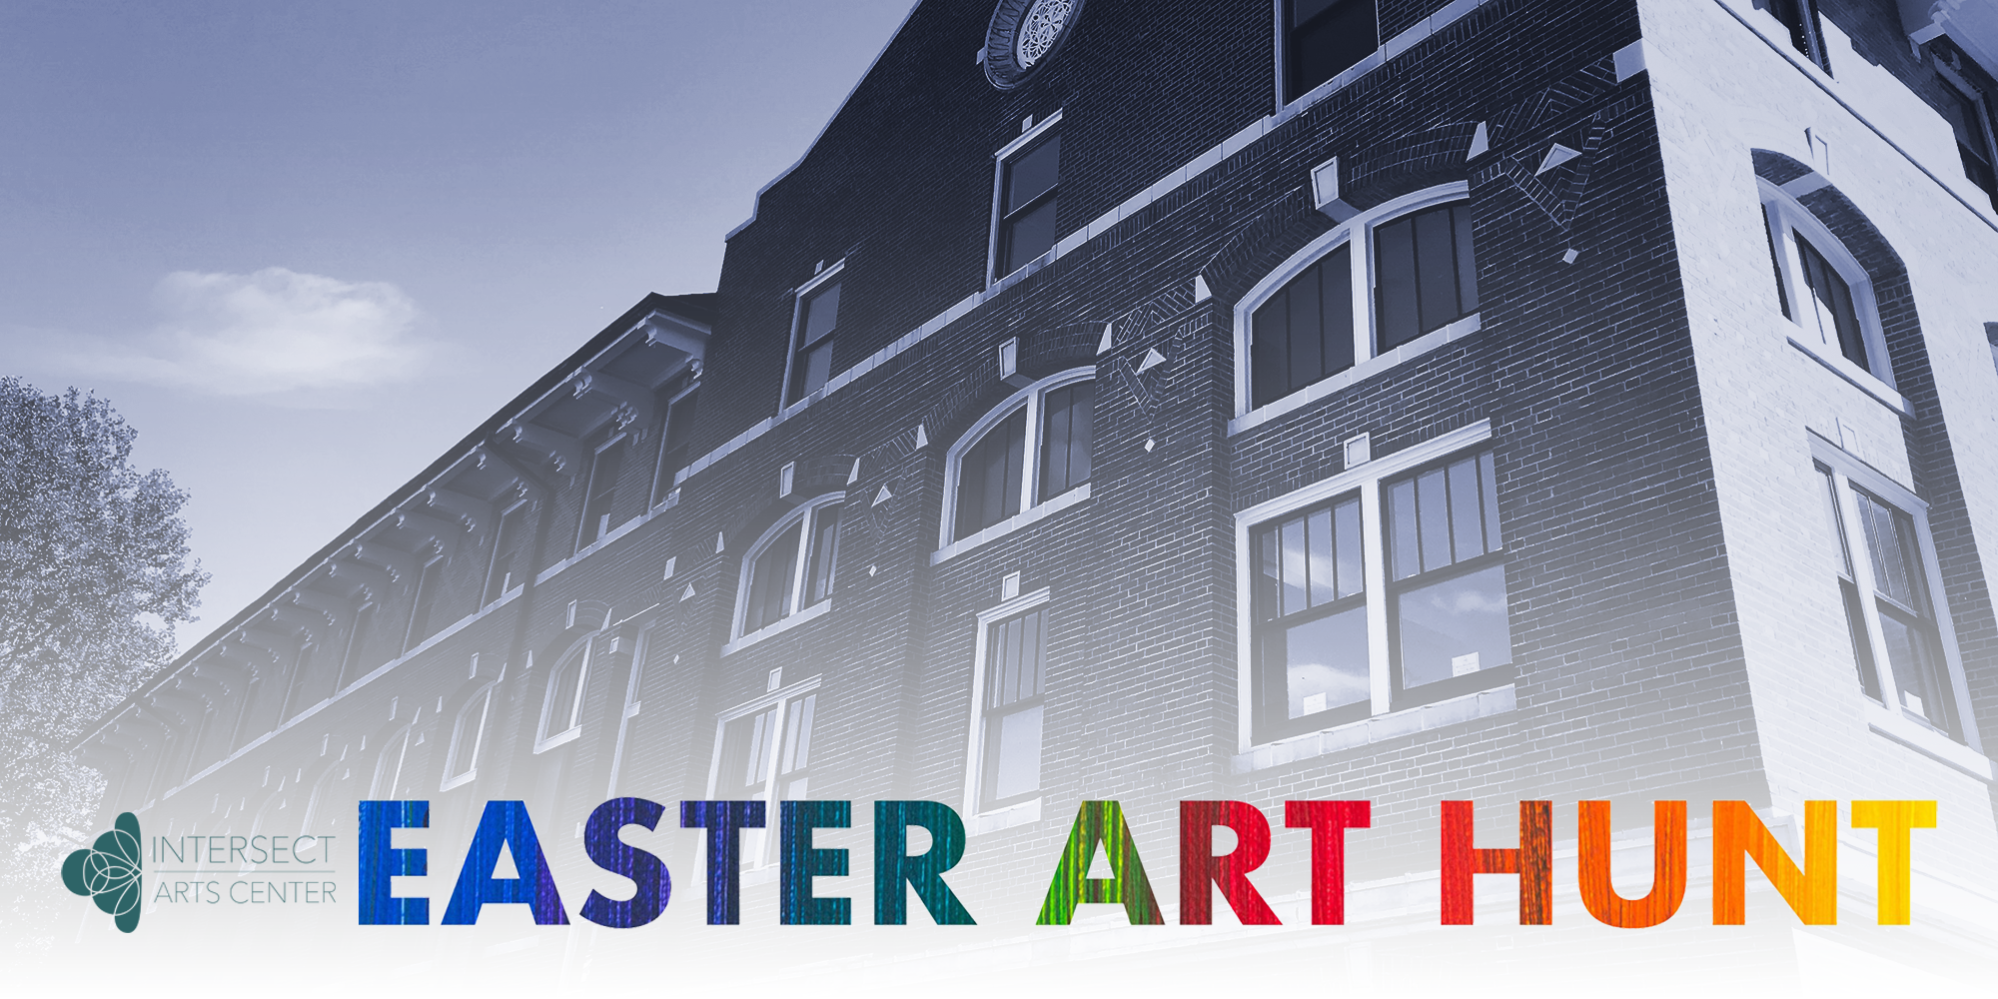 Intersect Arts Center's Easter Art Hunt.